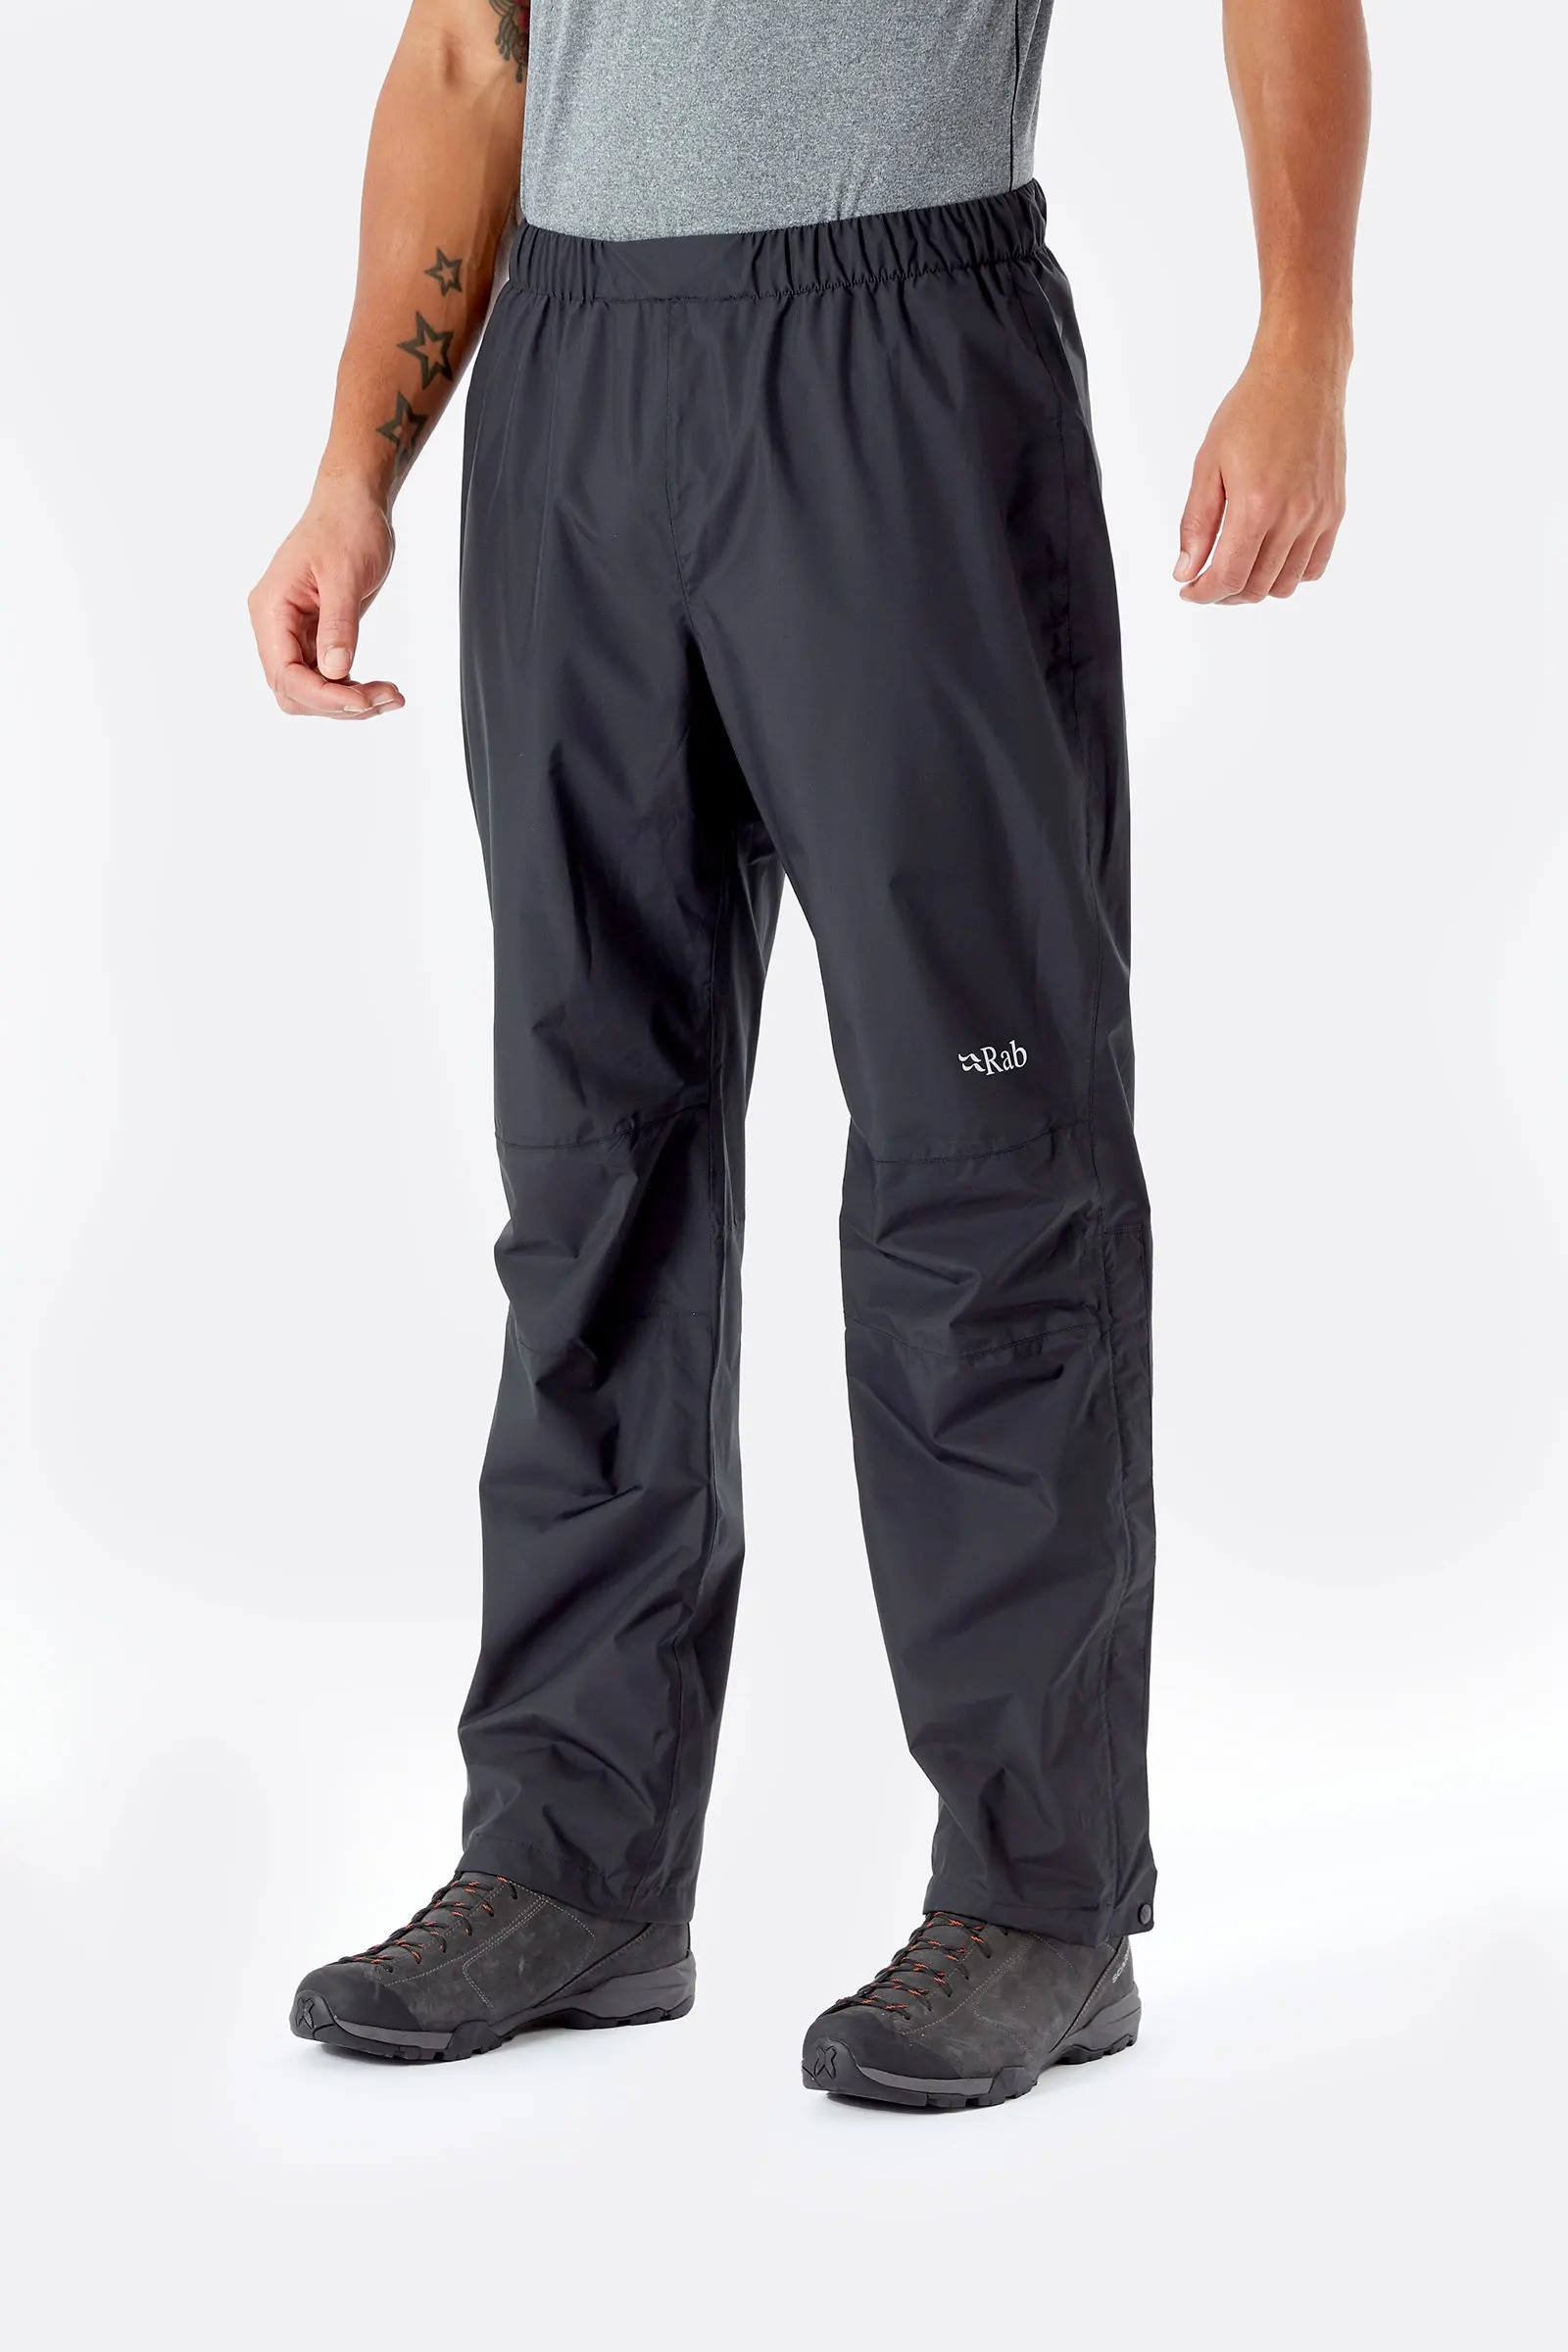 Rab - Downpour Eco Waterproof Trousers